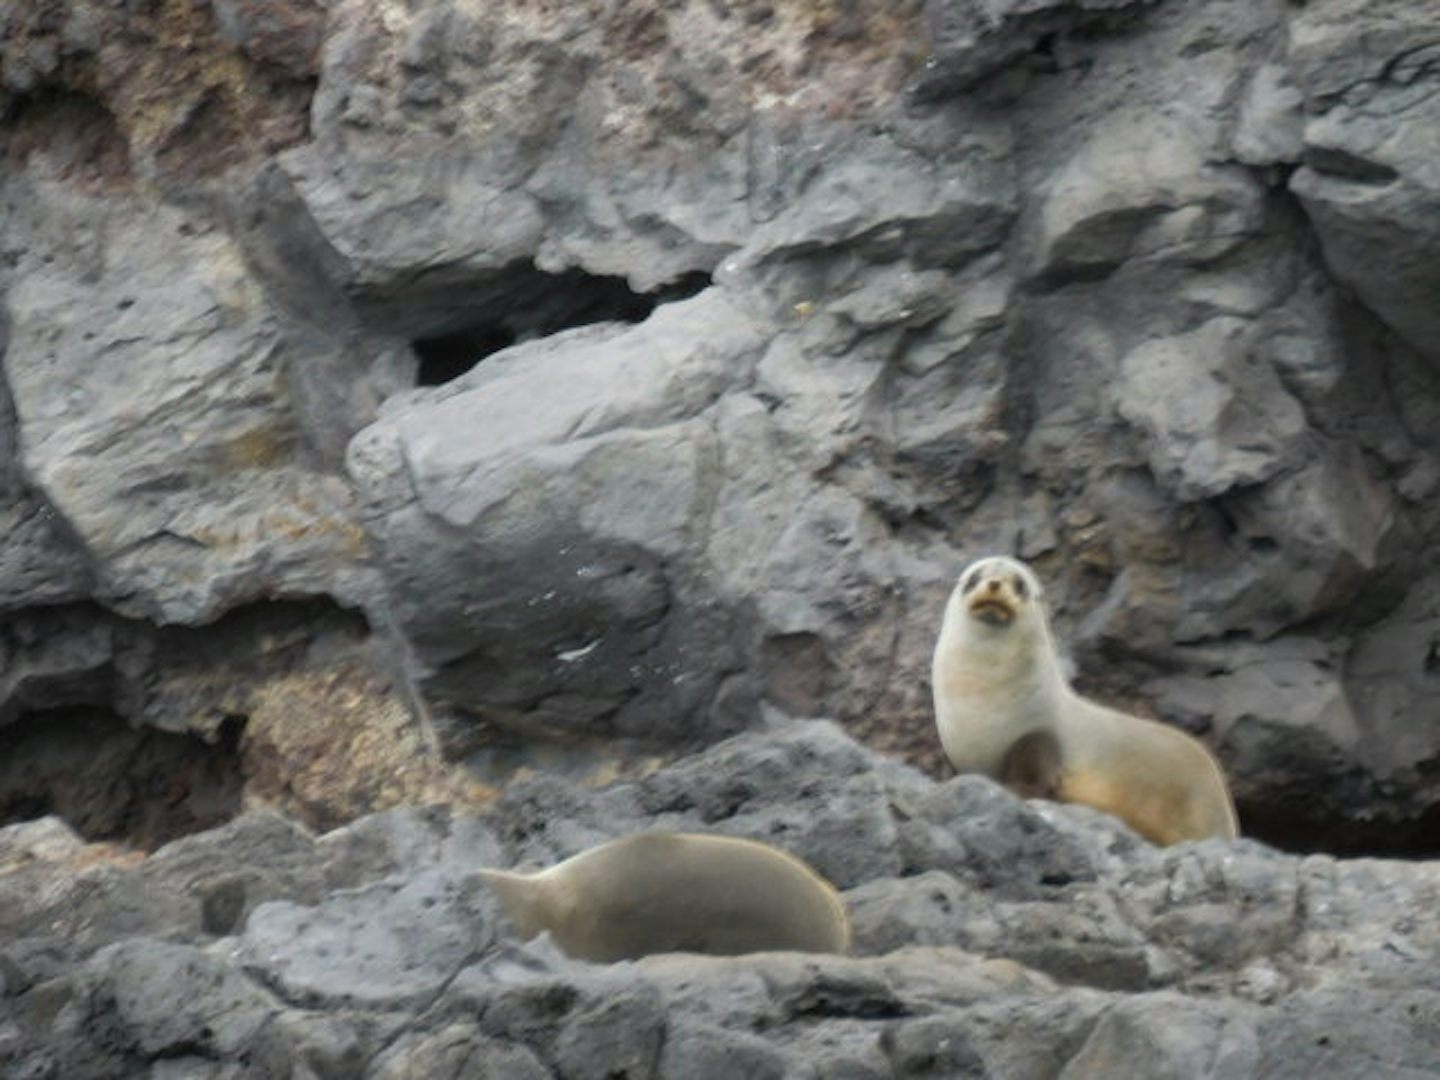 Fur Seal with attitude, taken at Akaroa